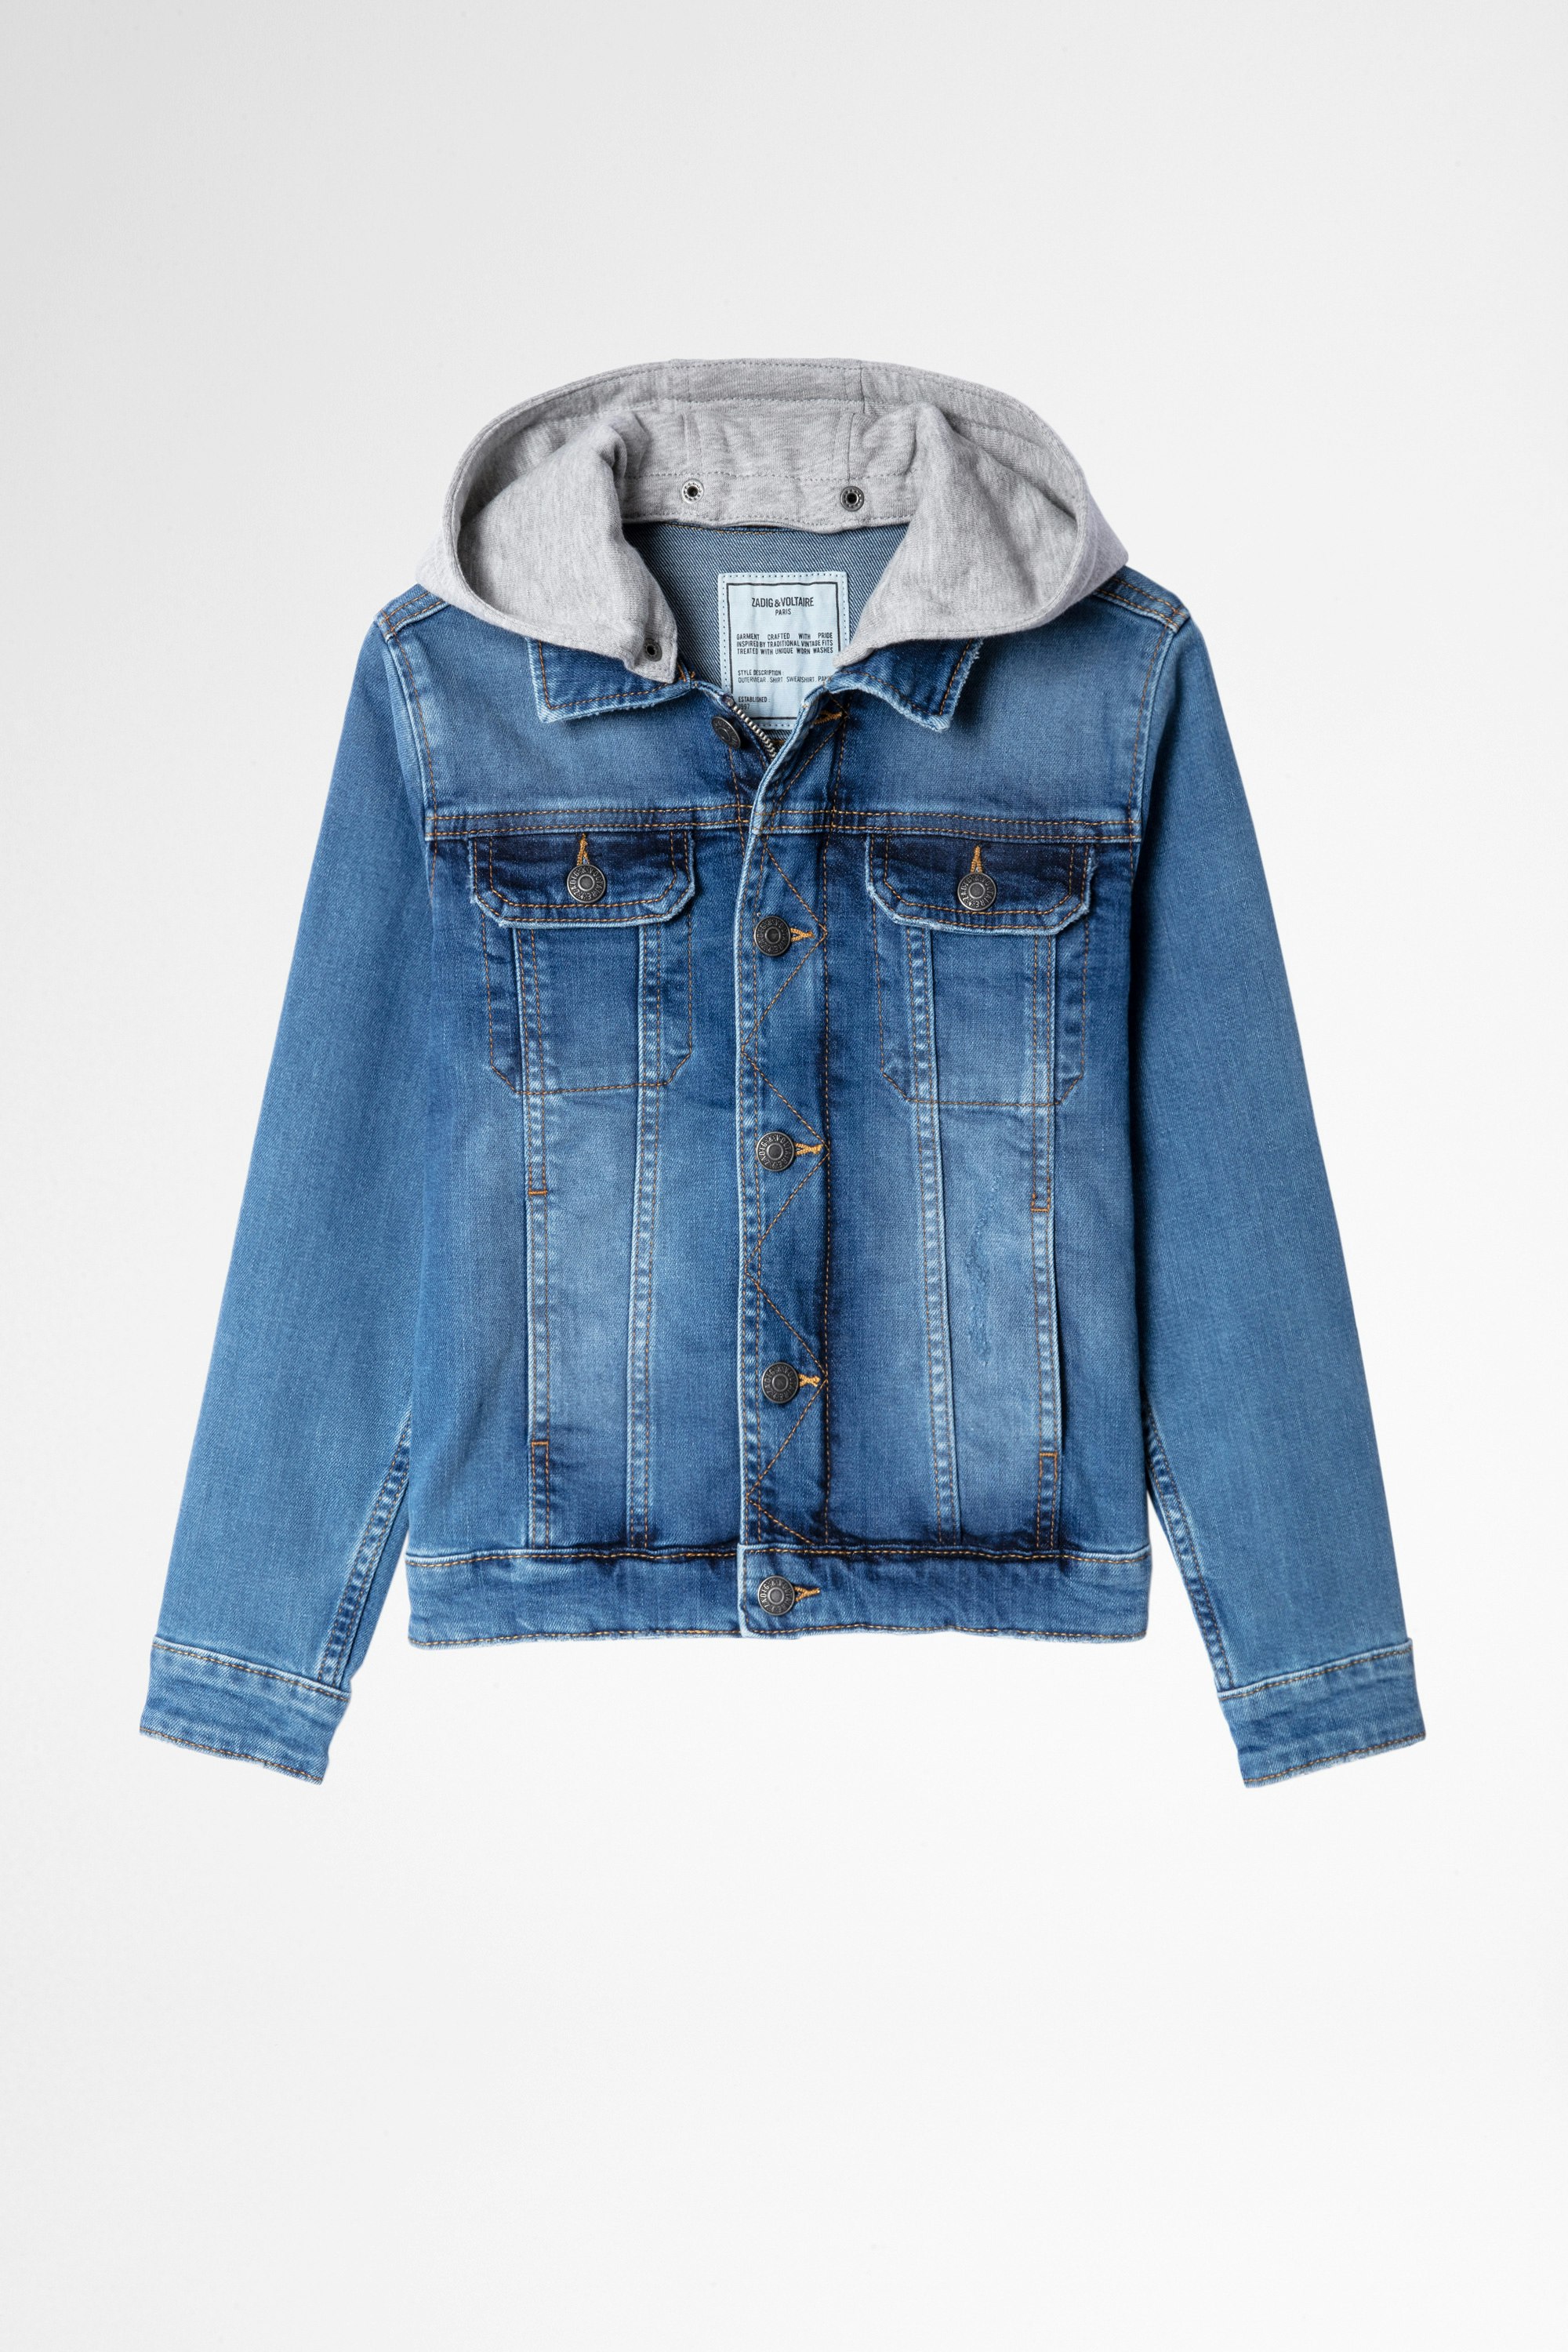 Noah Children's Jacket Children’s denim jacket